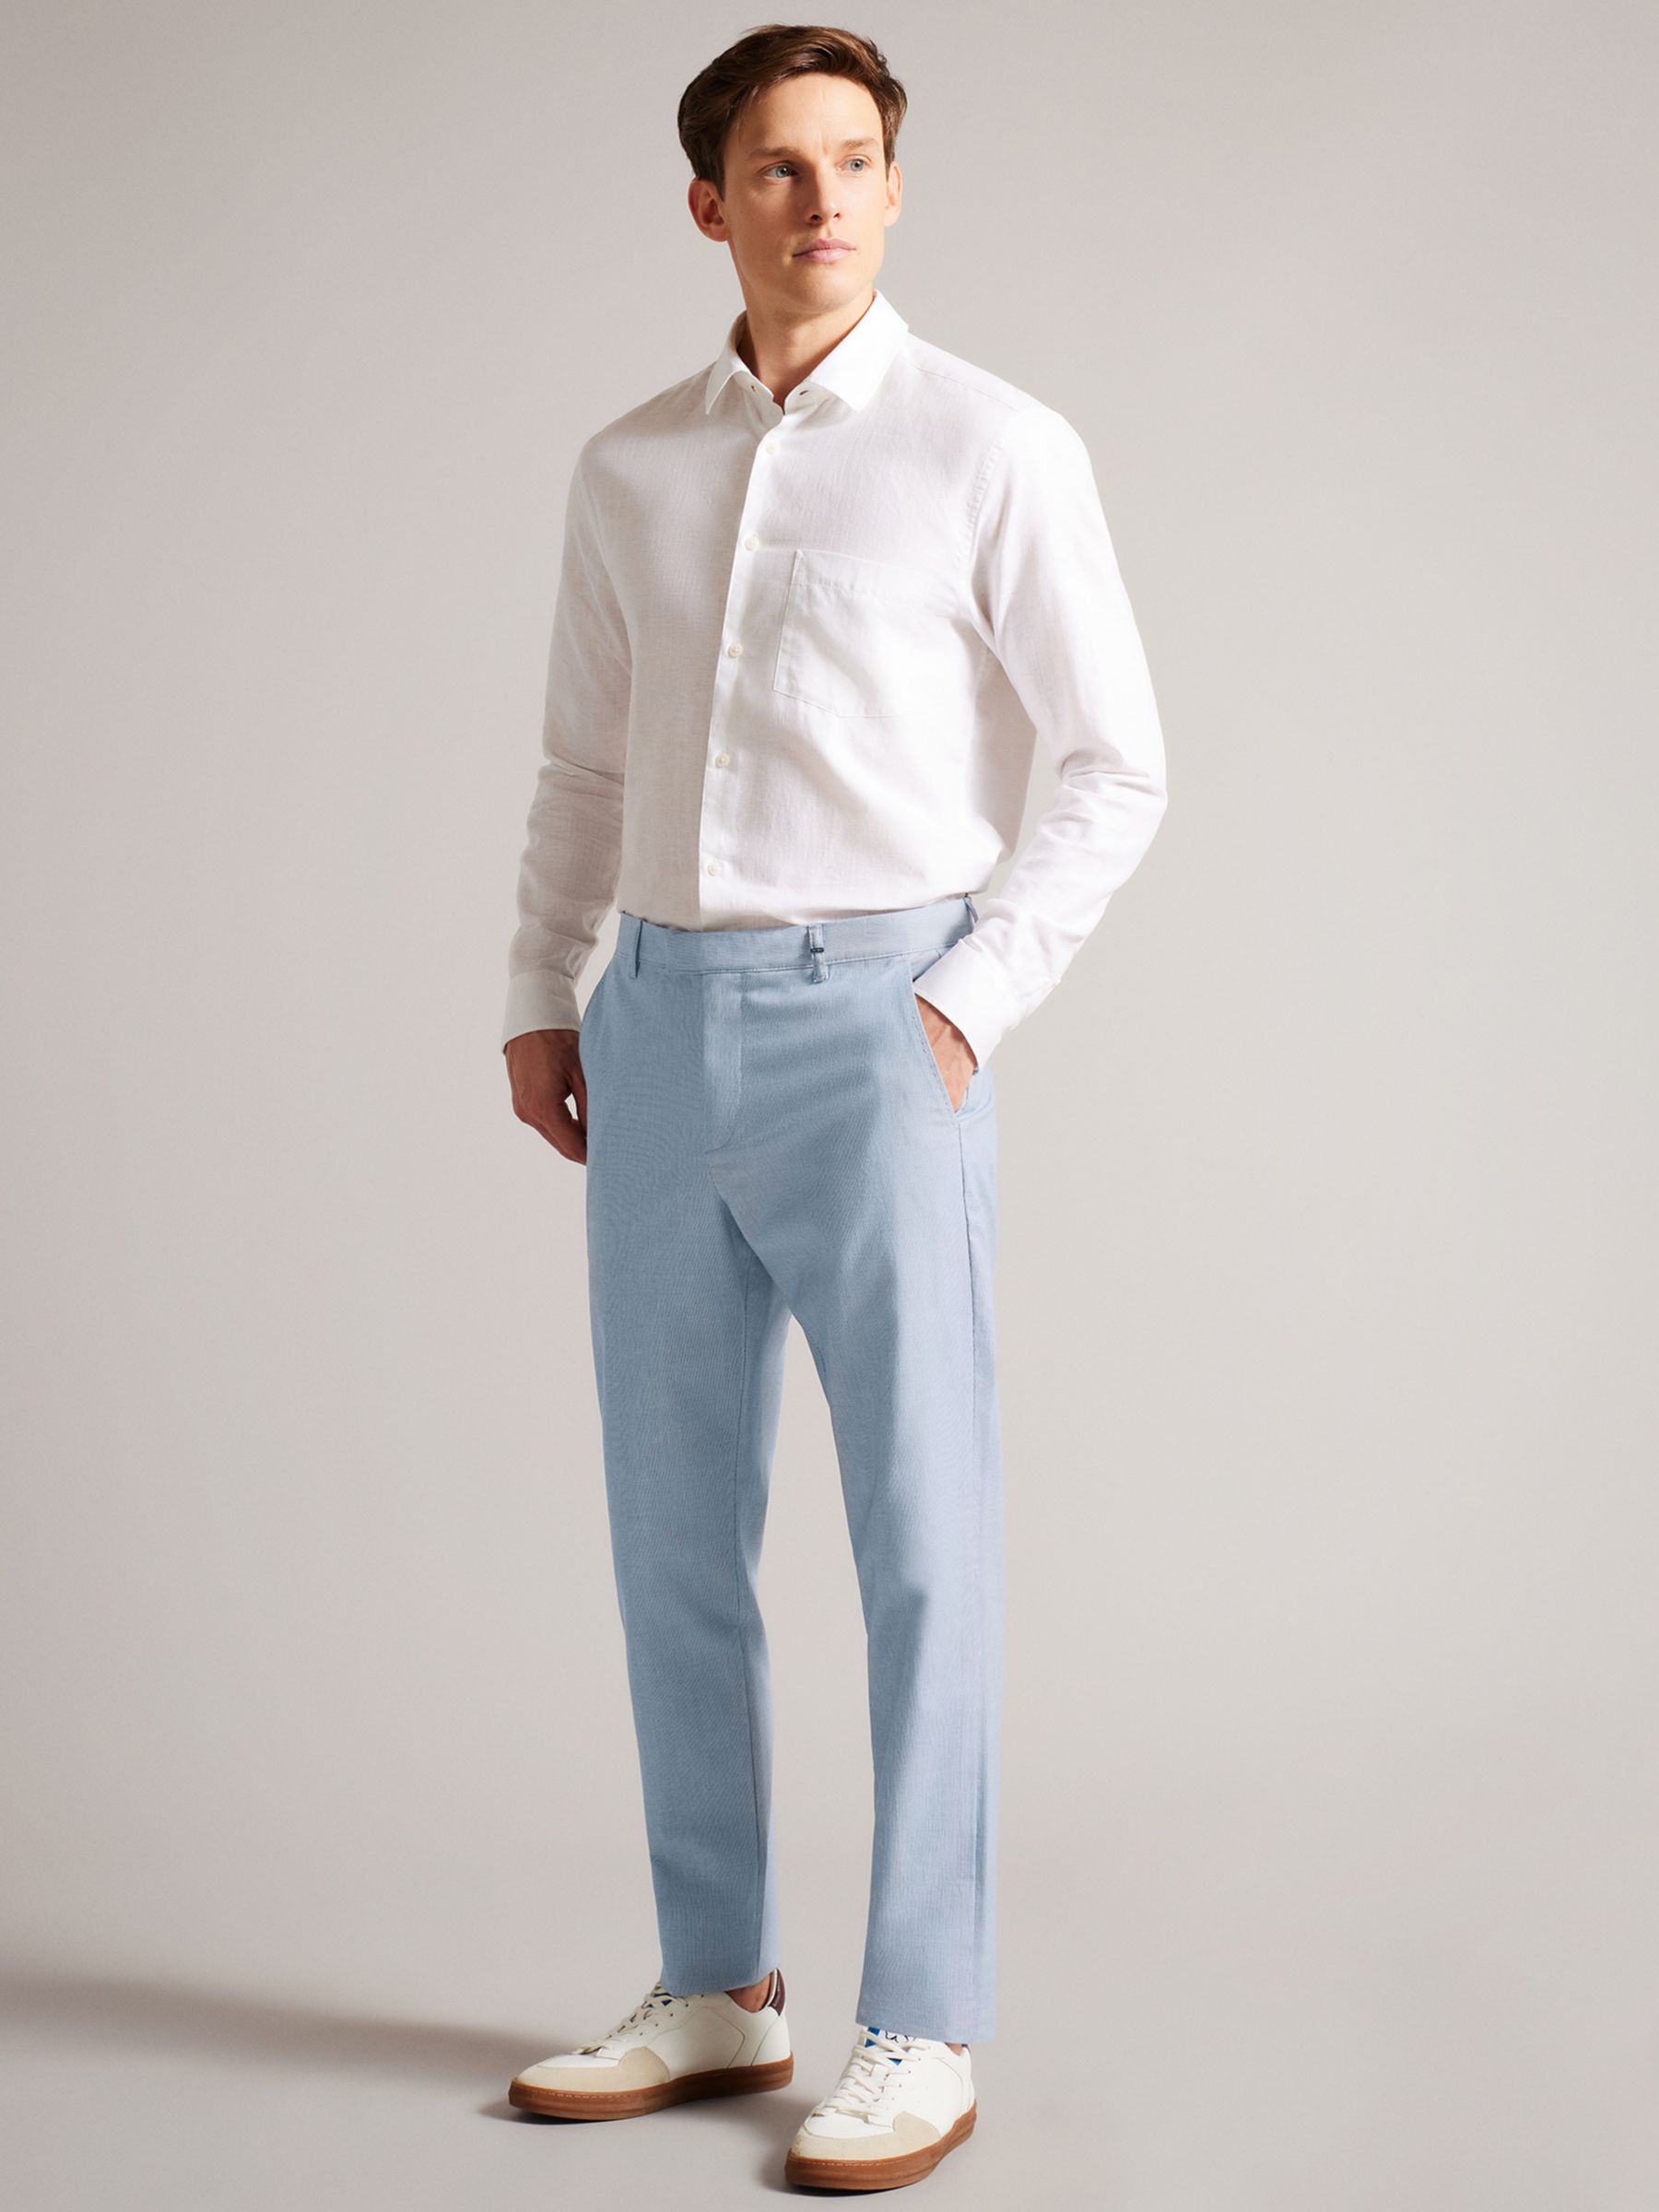 Ted Baker Irvine Slim Fit Trouser, Blue at John Lewis & Partners